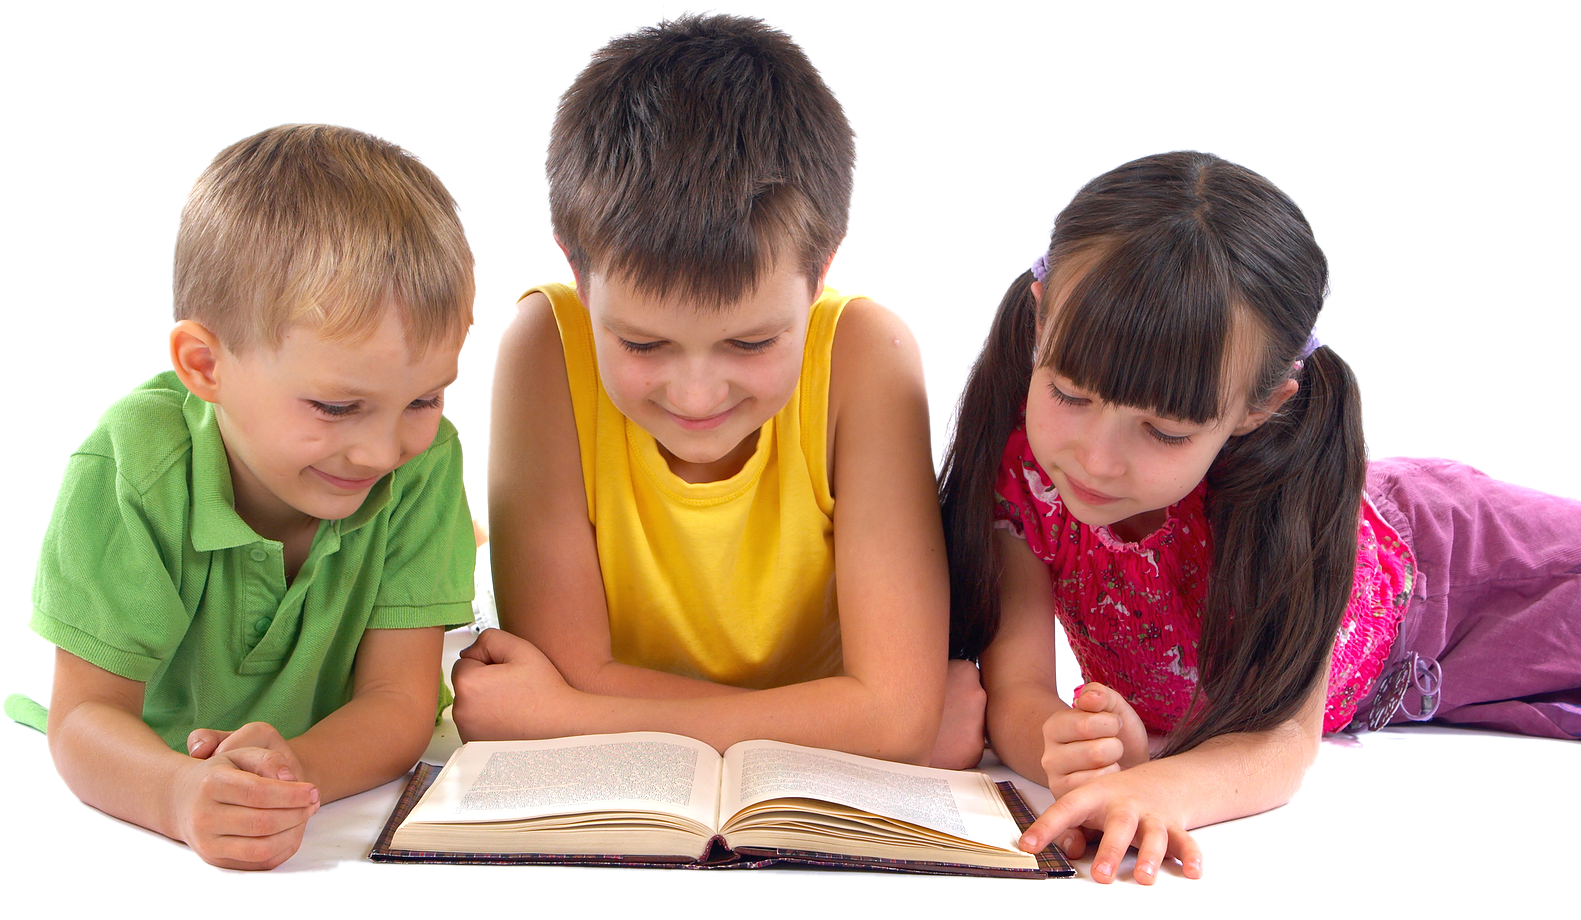 Kinder, die PNG-Fotos lesen